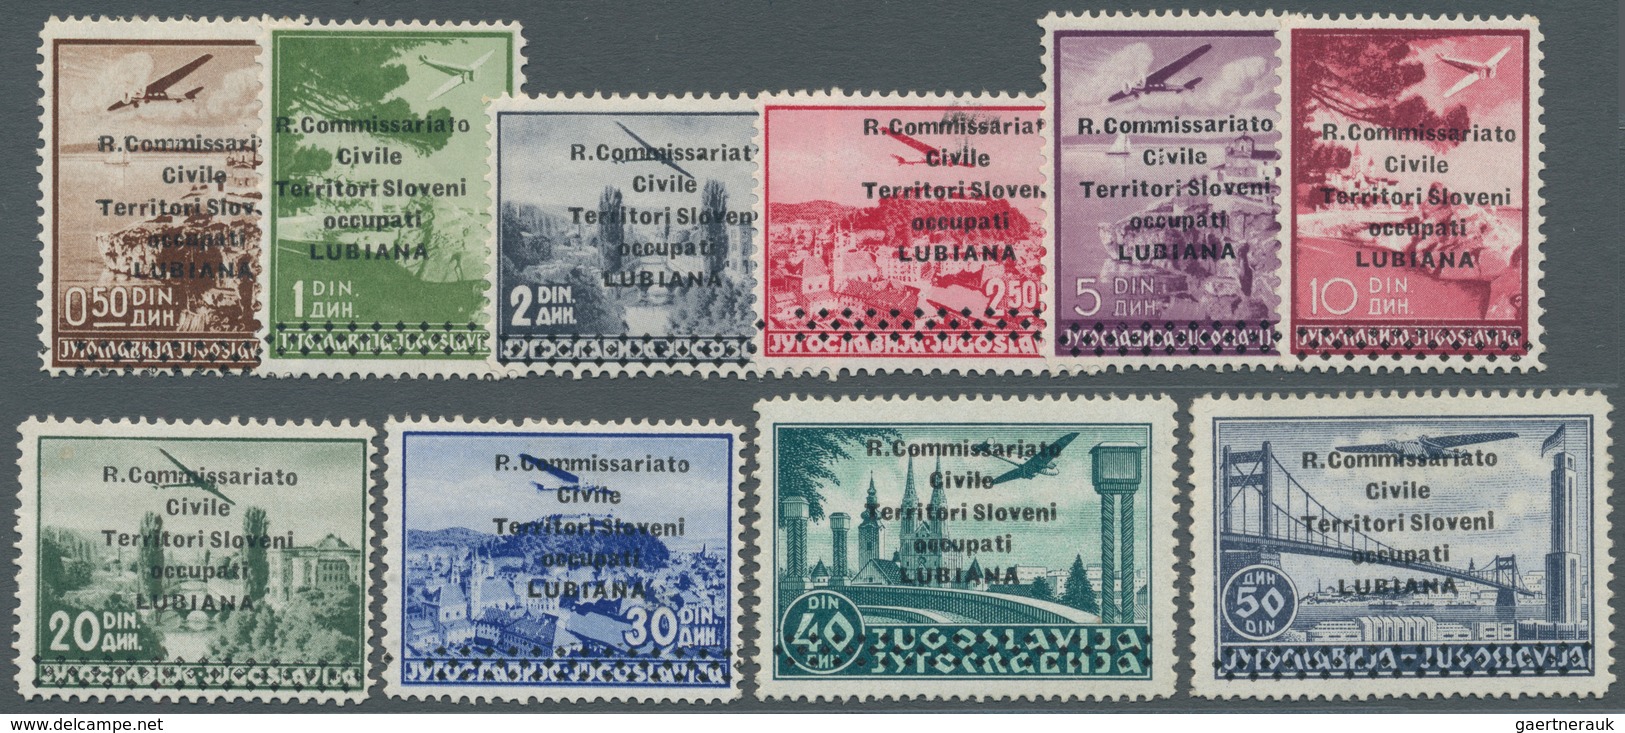 Italienische Besetzung 1941/43 - Laibach: 1941, Airmails, Complete Set Of Ten Values, Mint Original - Ljubljana